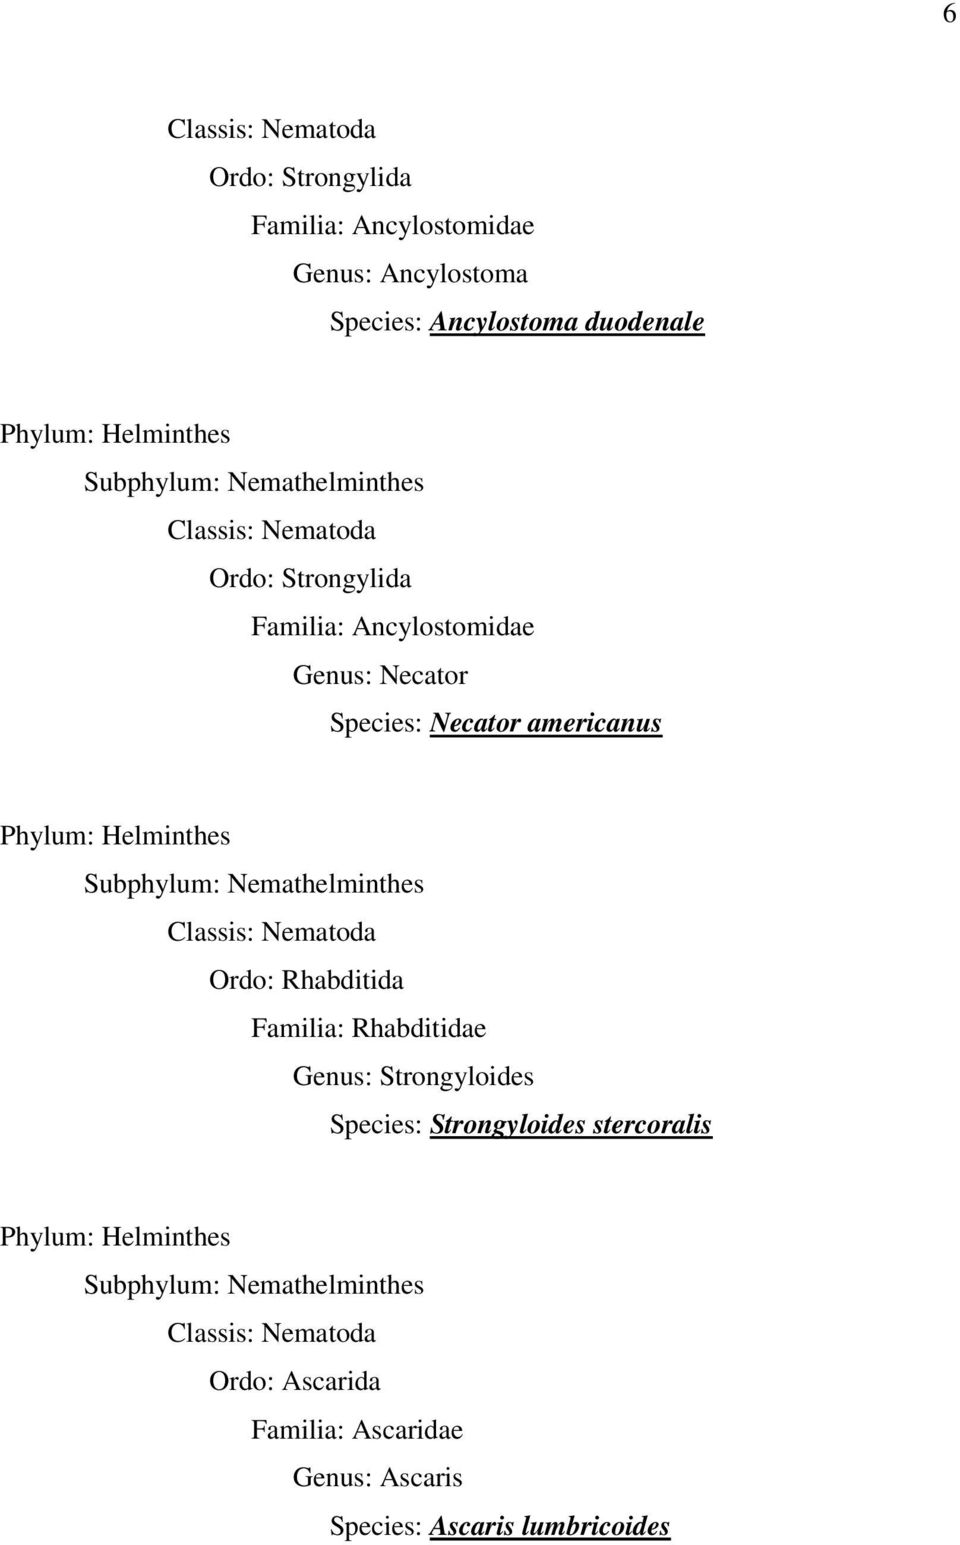 Helminthes Subphylum: Nemathelminthes Classis: Nematoda Ordo: Rhabditida Familia: Rhabditidae Genus: Strongyloides Species: Strongyloides